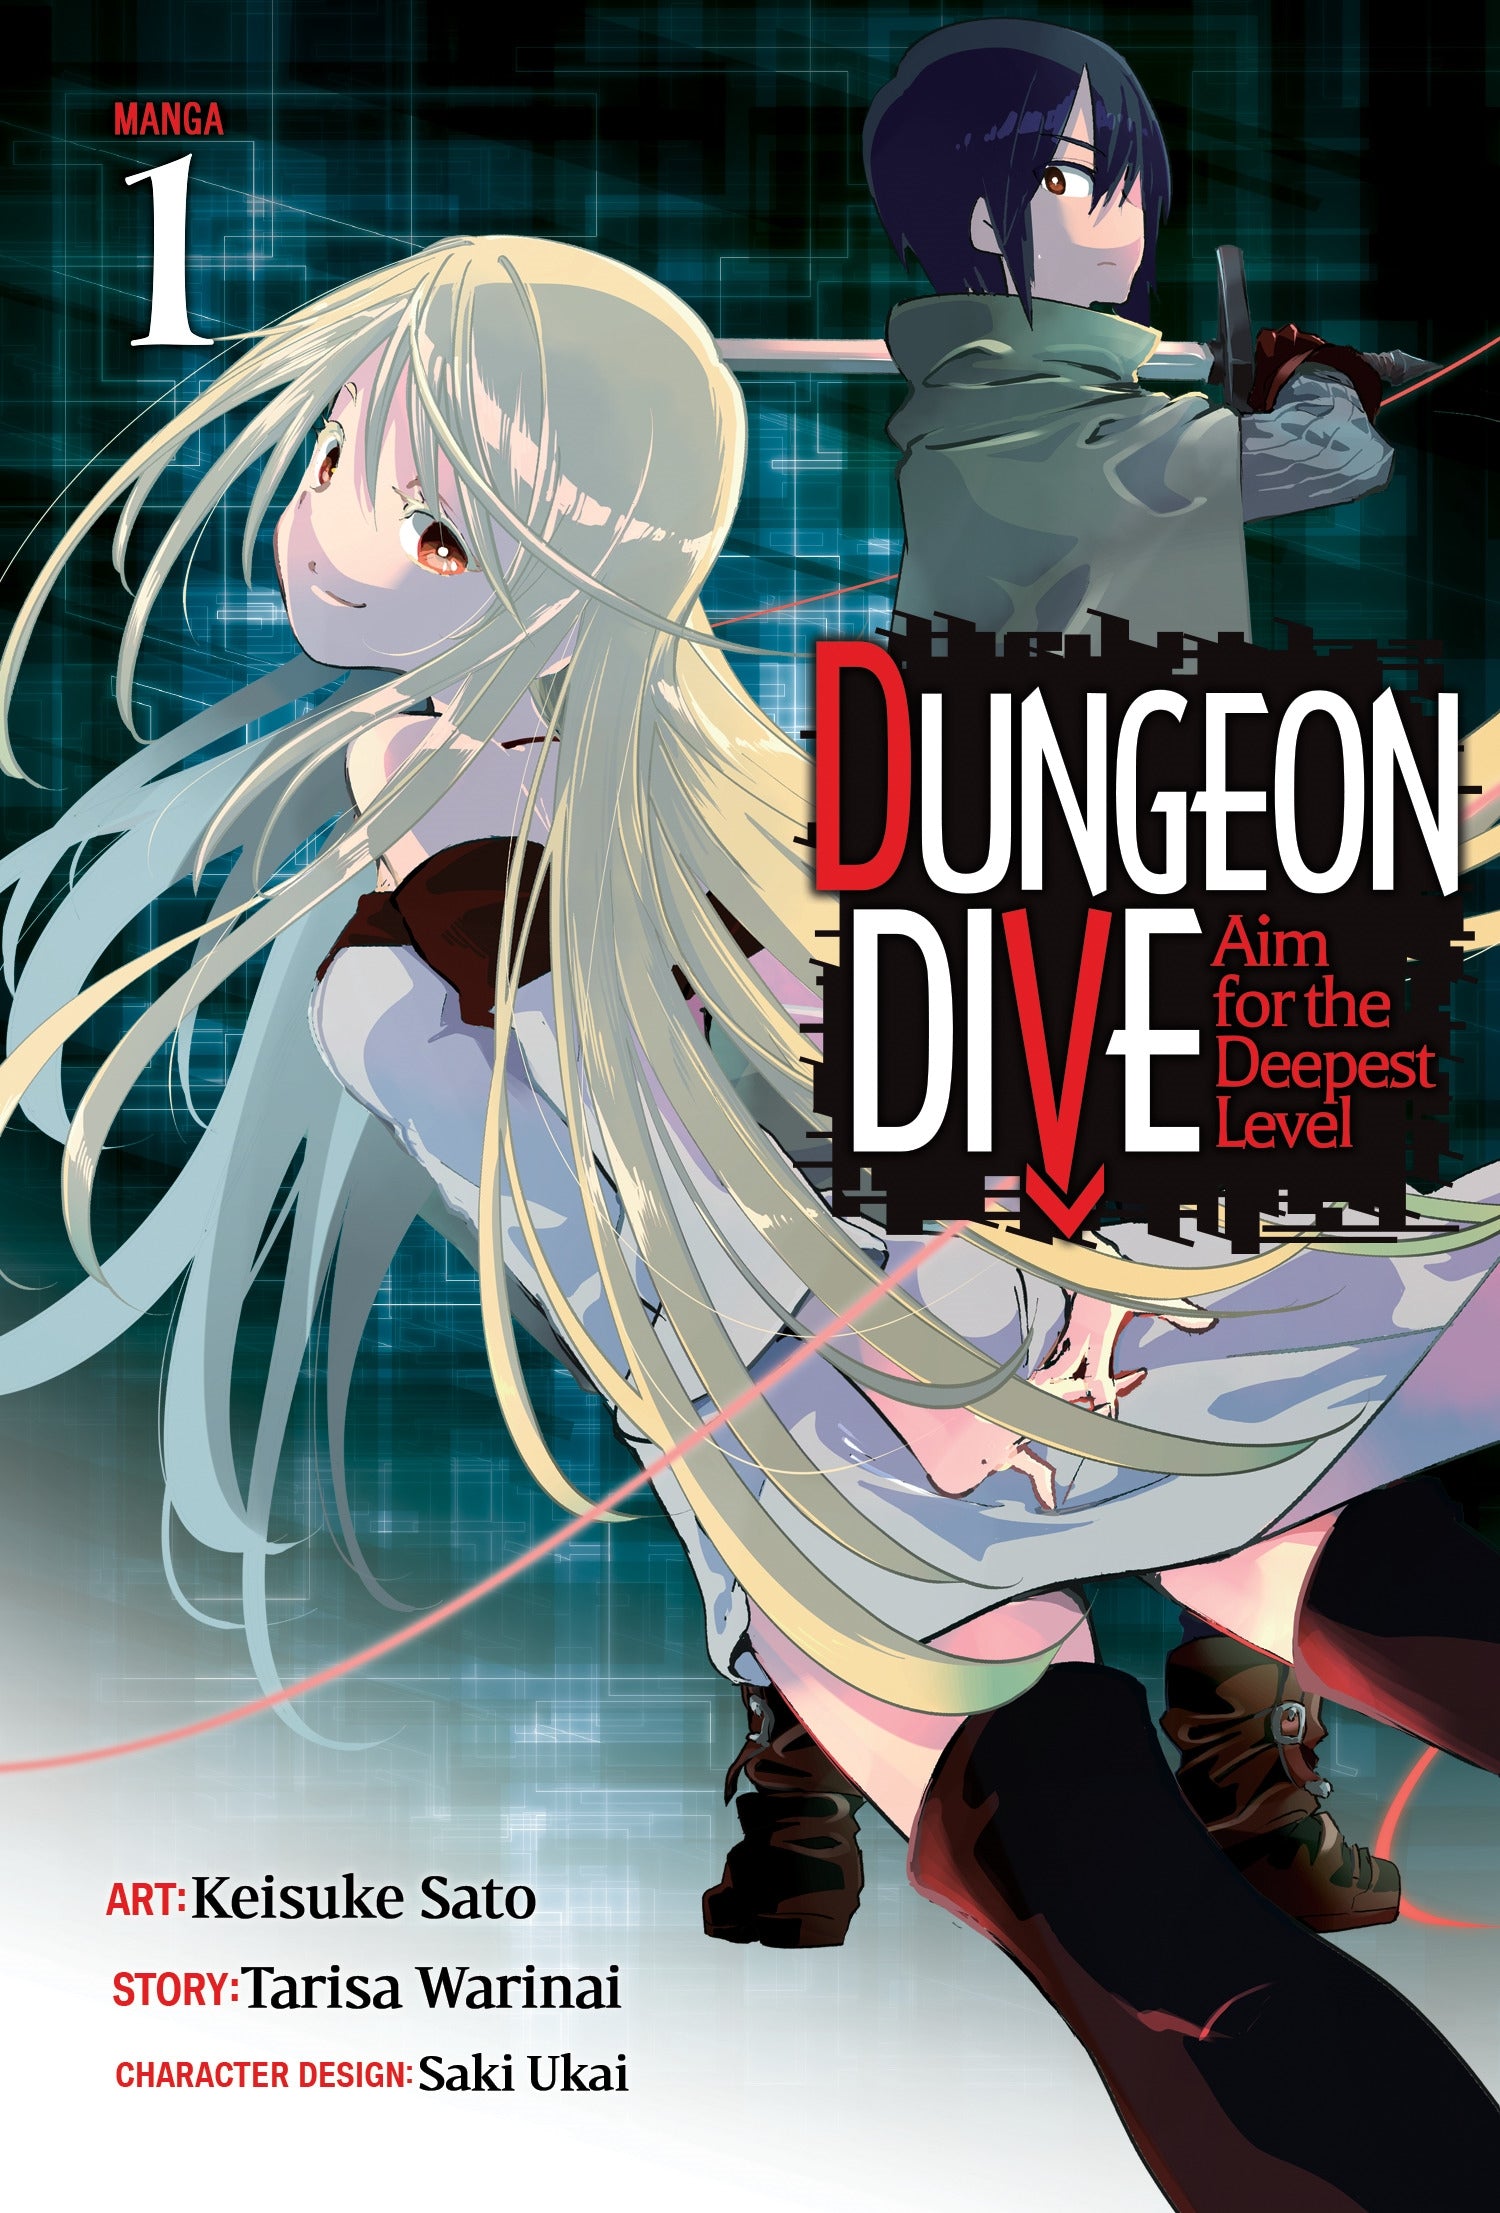 DUNGEON DIVE : Aim for the Deepest Level (Manga) Vol. 1 - Manga Warehouse